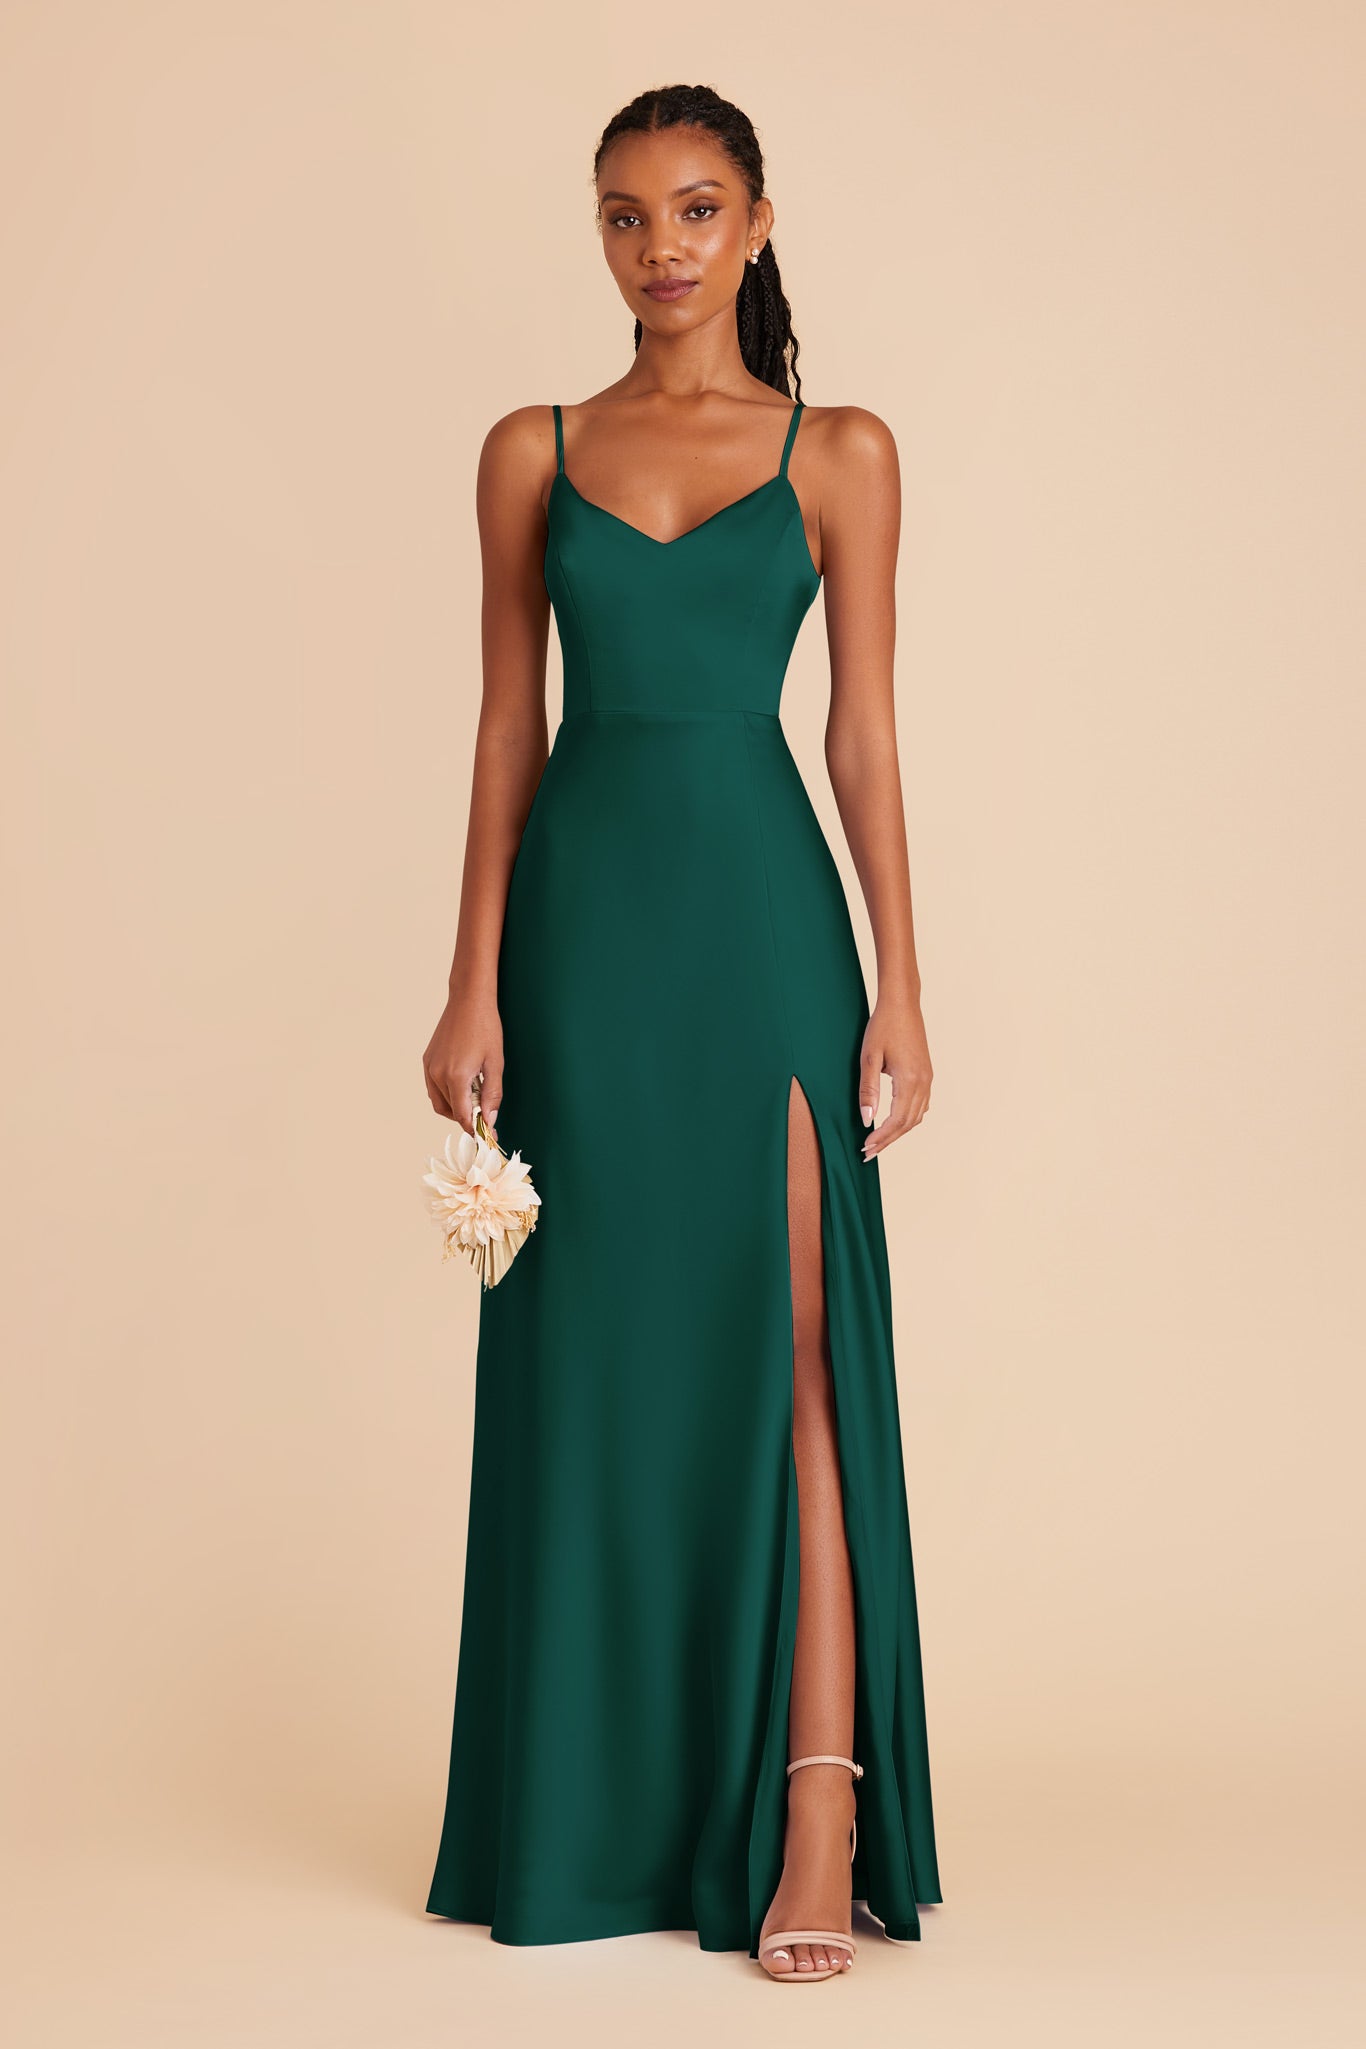 Emerald Jay Matte Satin Dress by Birdy Grey